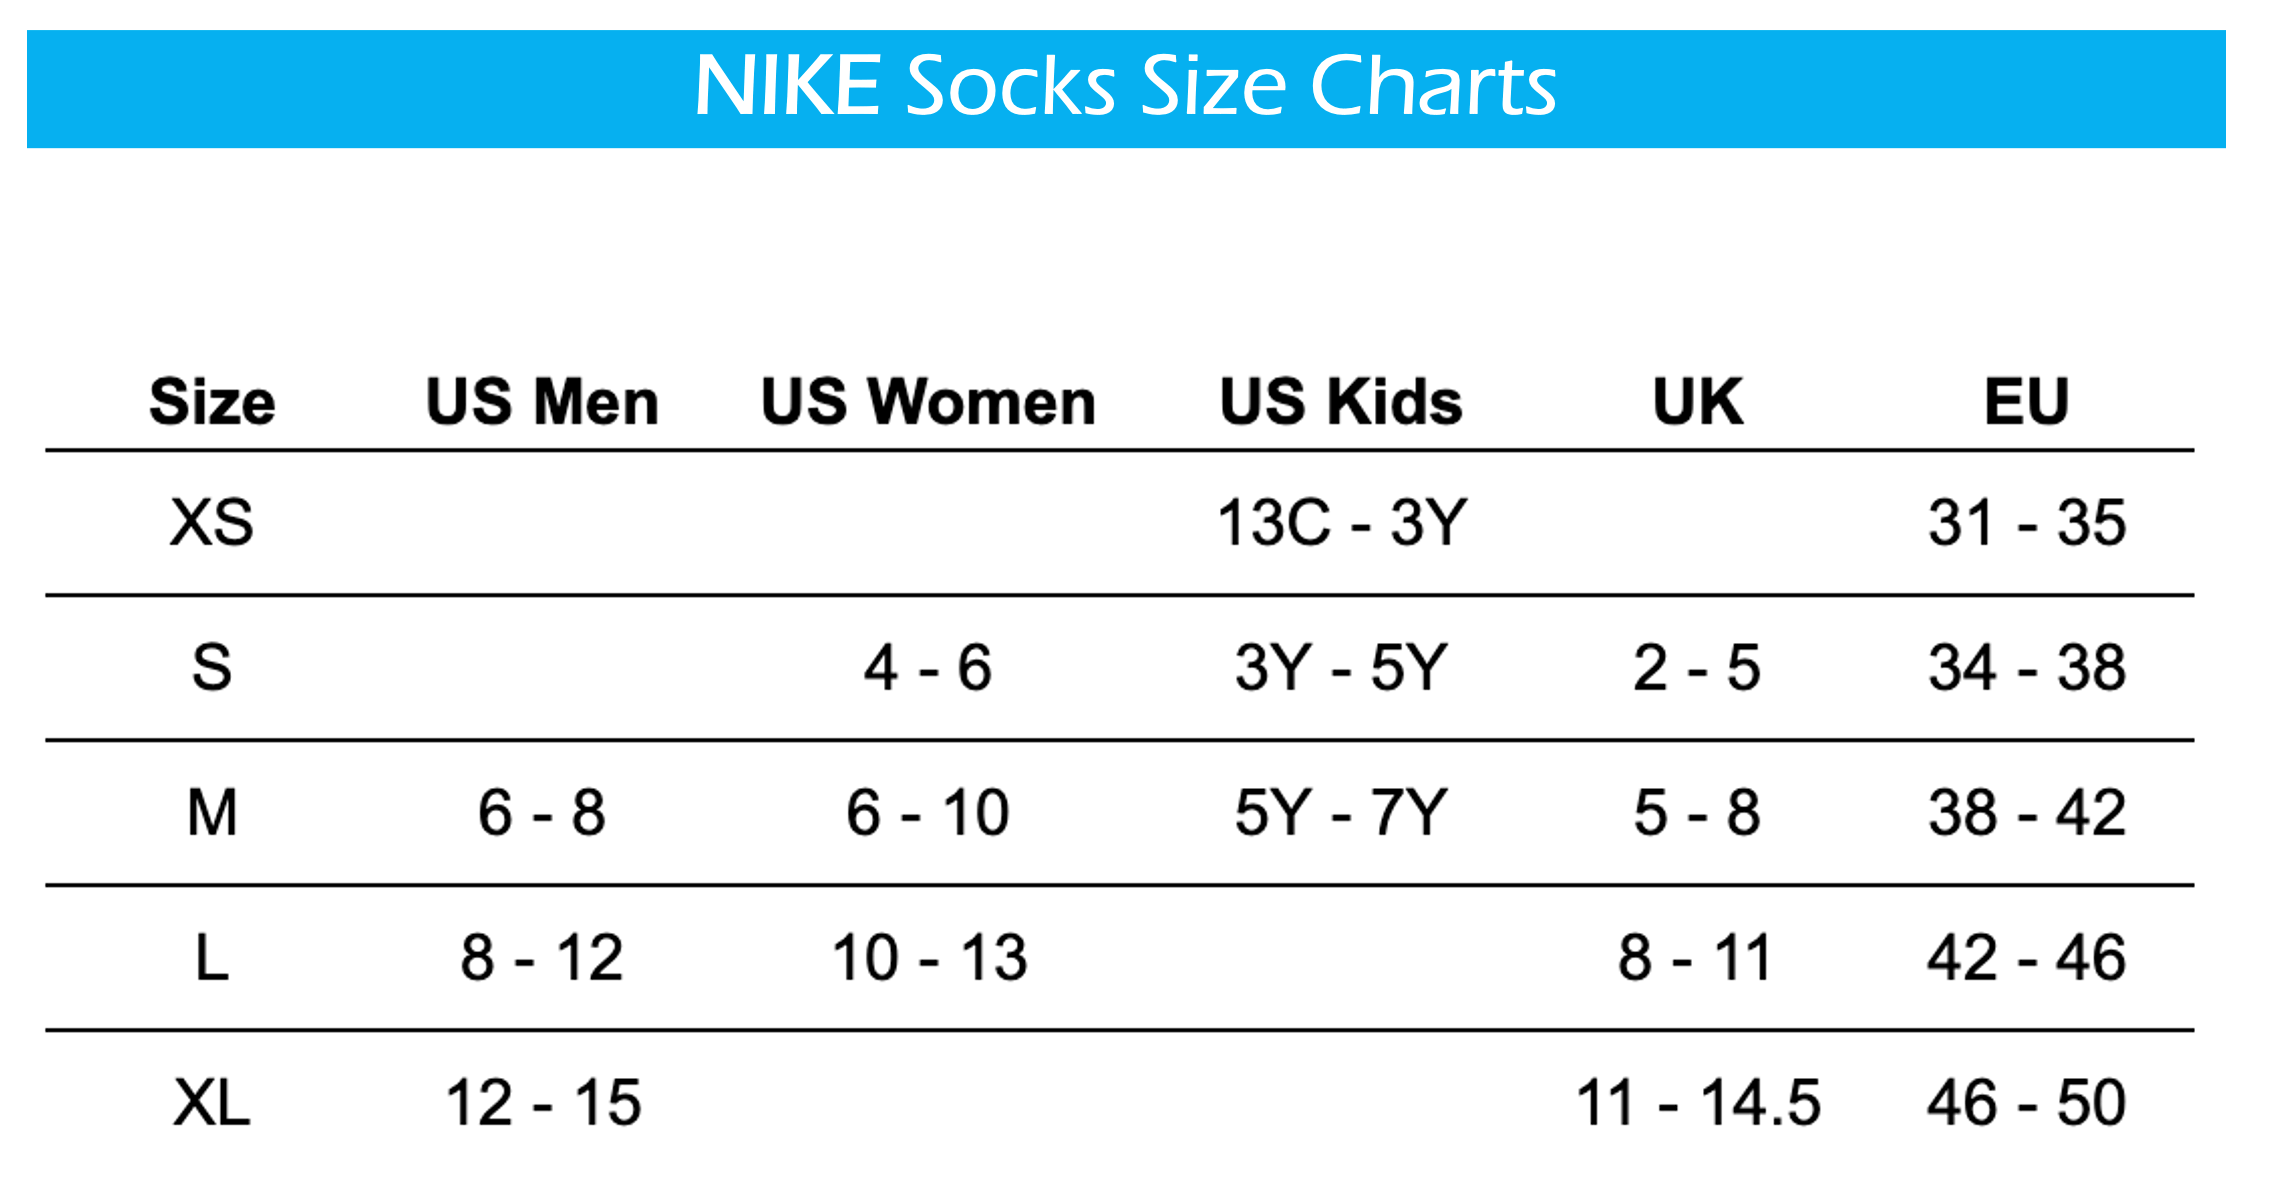 Nike Unisex Everyday Essential Ankle Socks 3-Pack - White/Multi